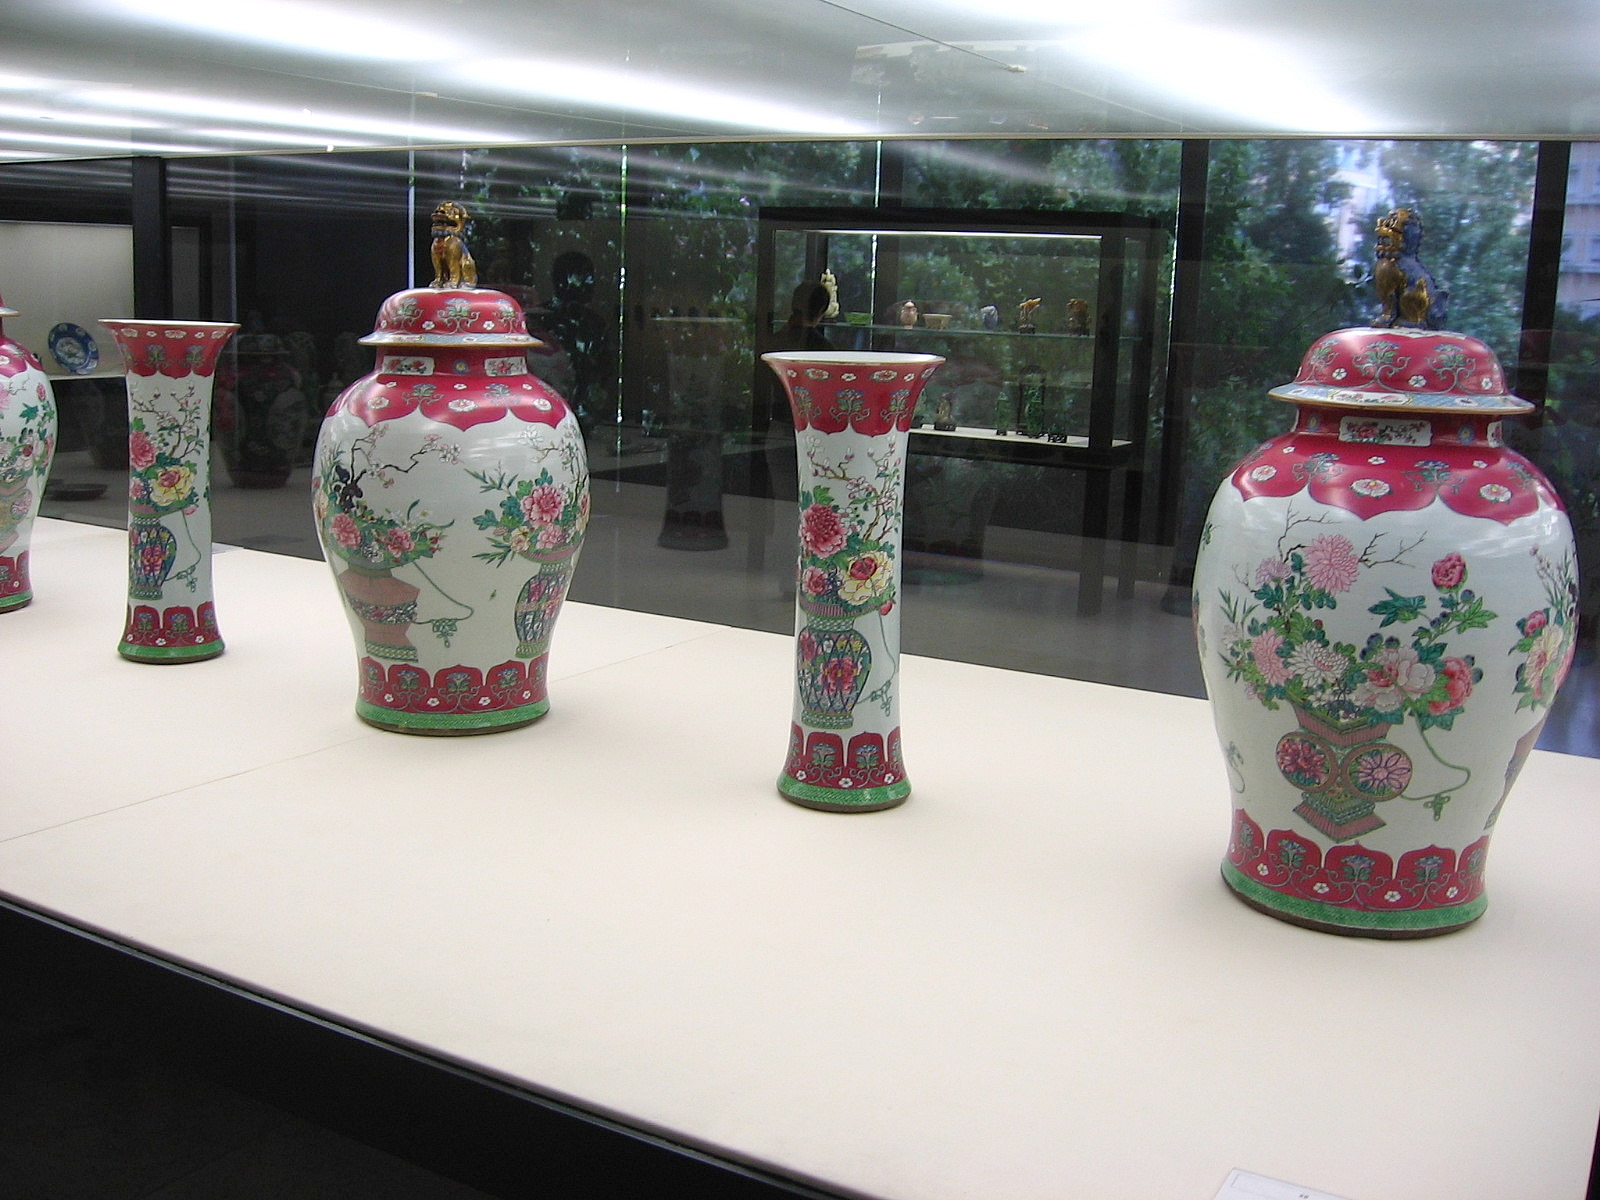 Цинские вазы из Музея Галуста Гюльбенкяна, Лиссабон, Португалия